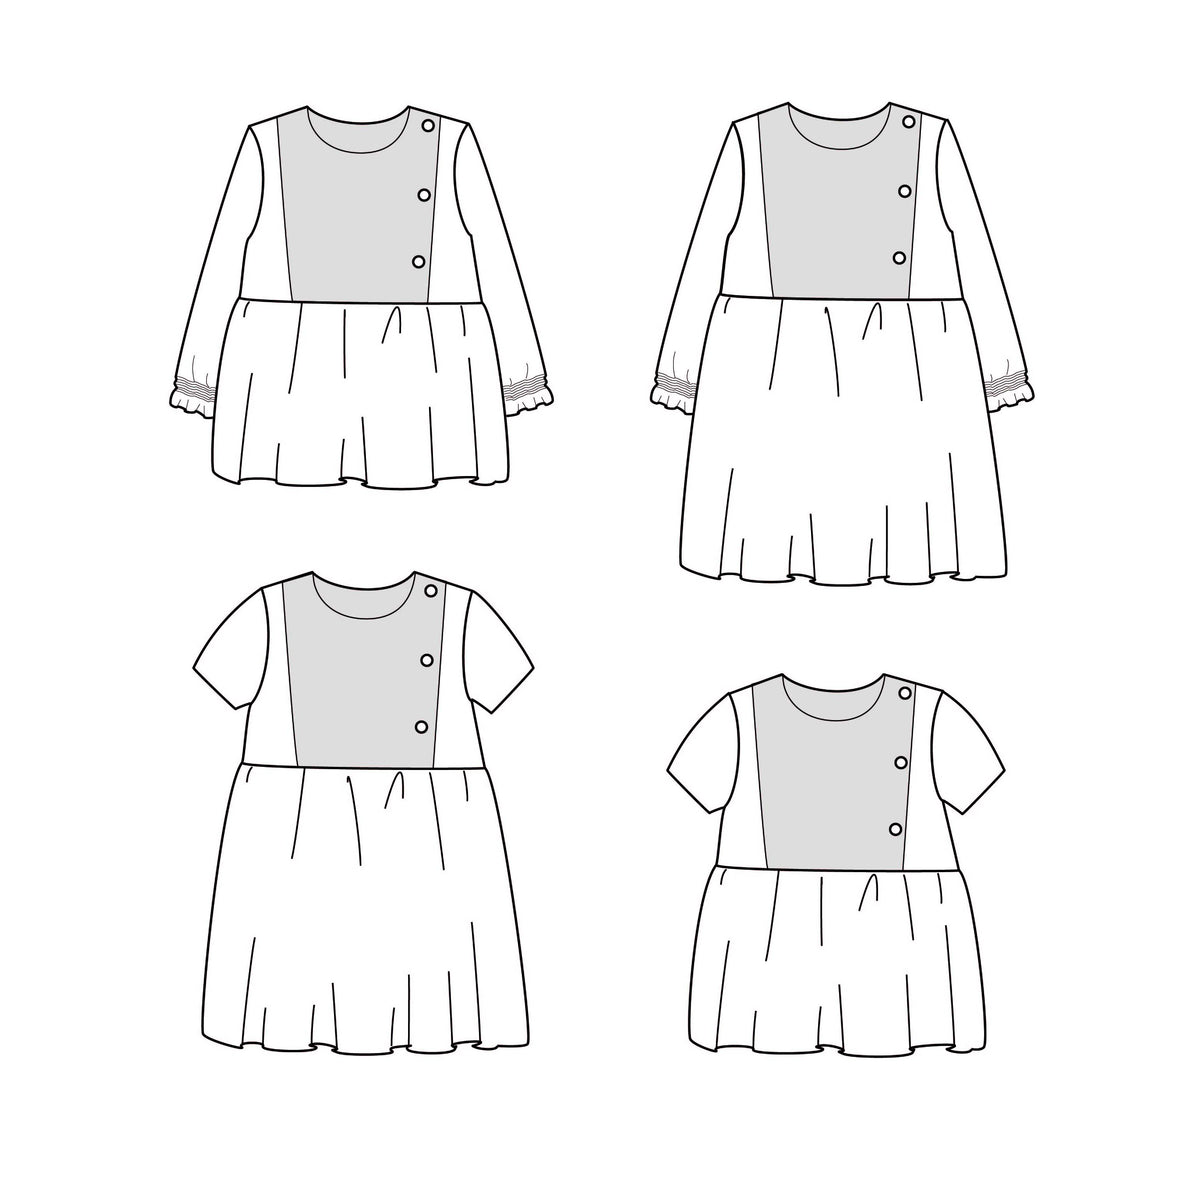 PALERME blouse or dress - Baby 6M/4Y - PDF Sewing Pattern – Ikatee ...